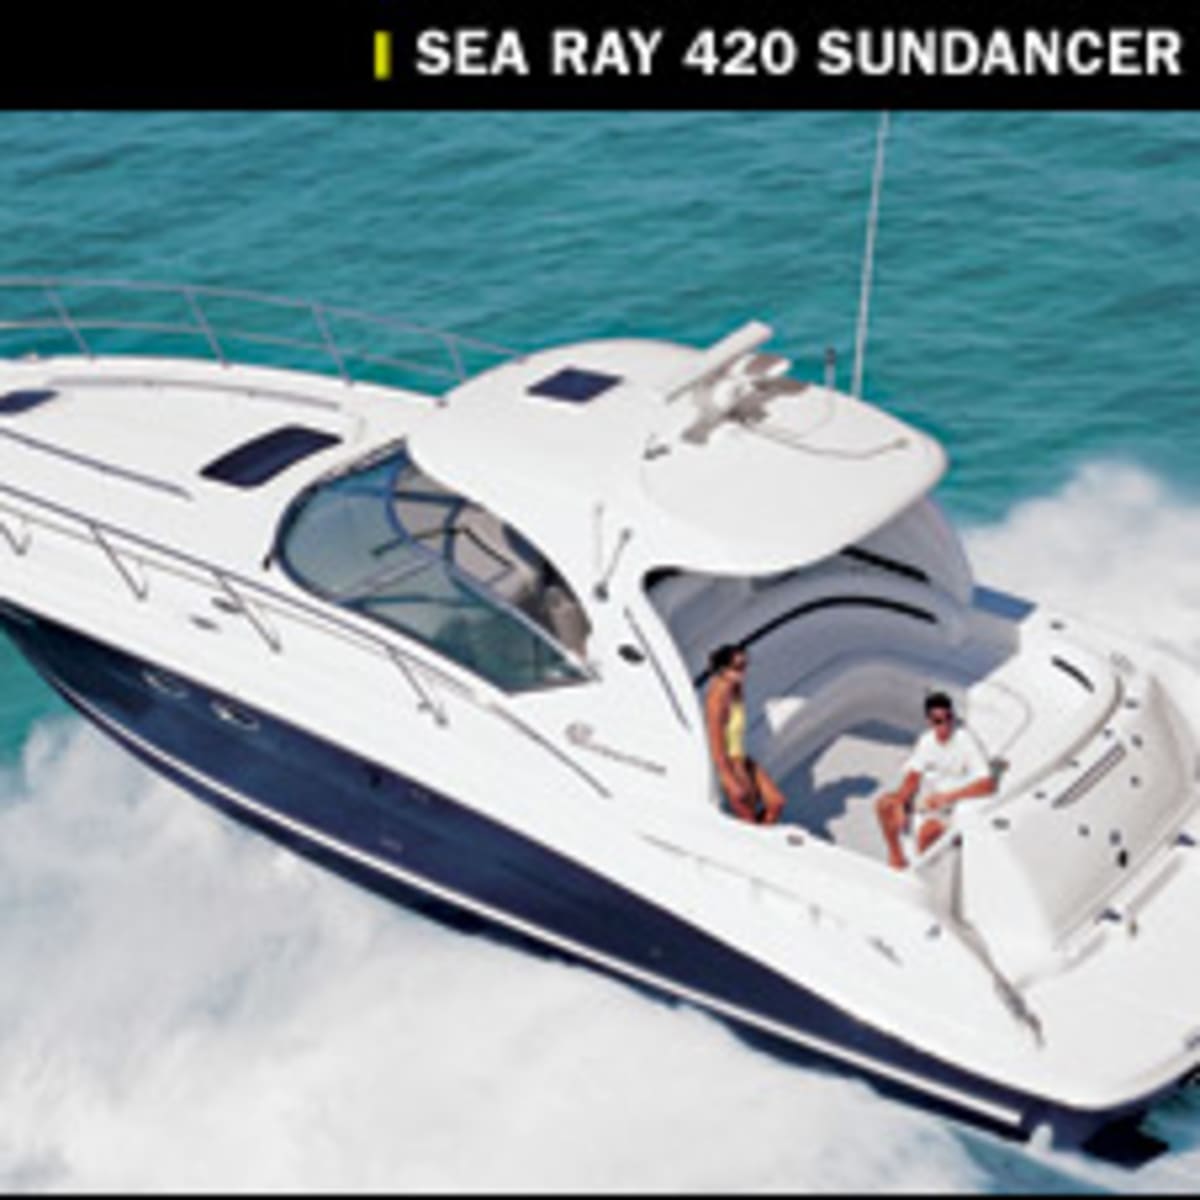 Sea Ray 420 Sundancer - Power & Motoryacht